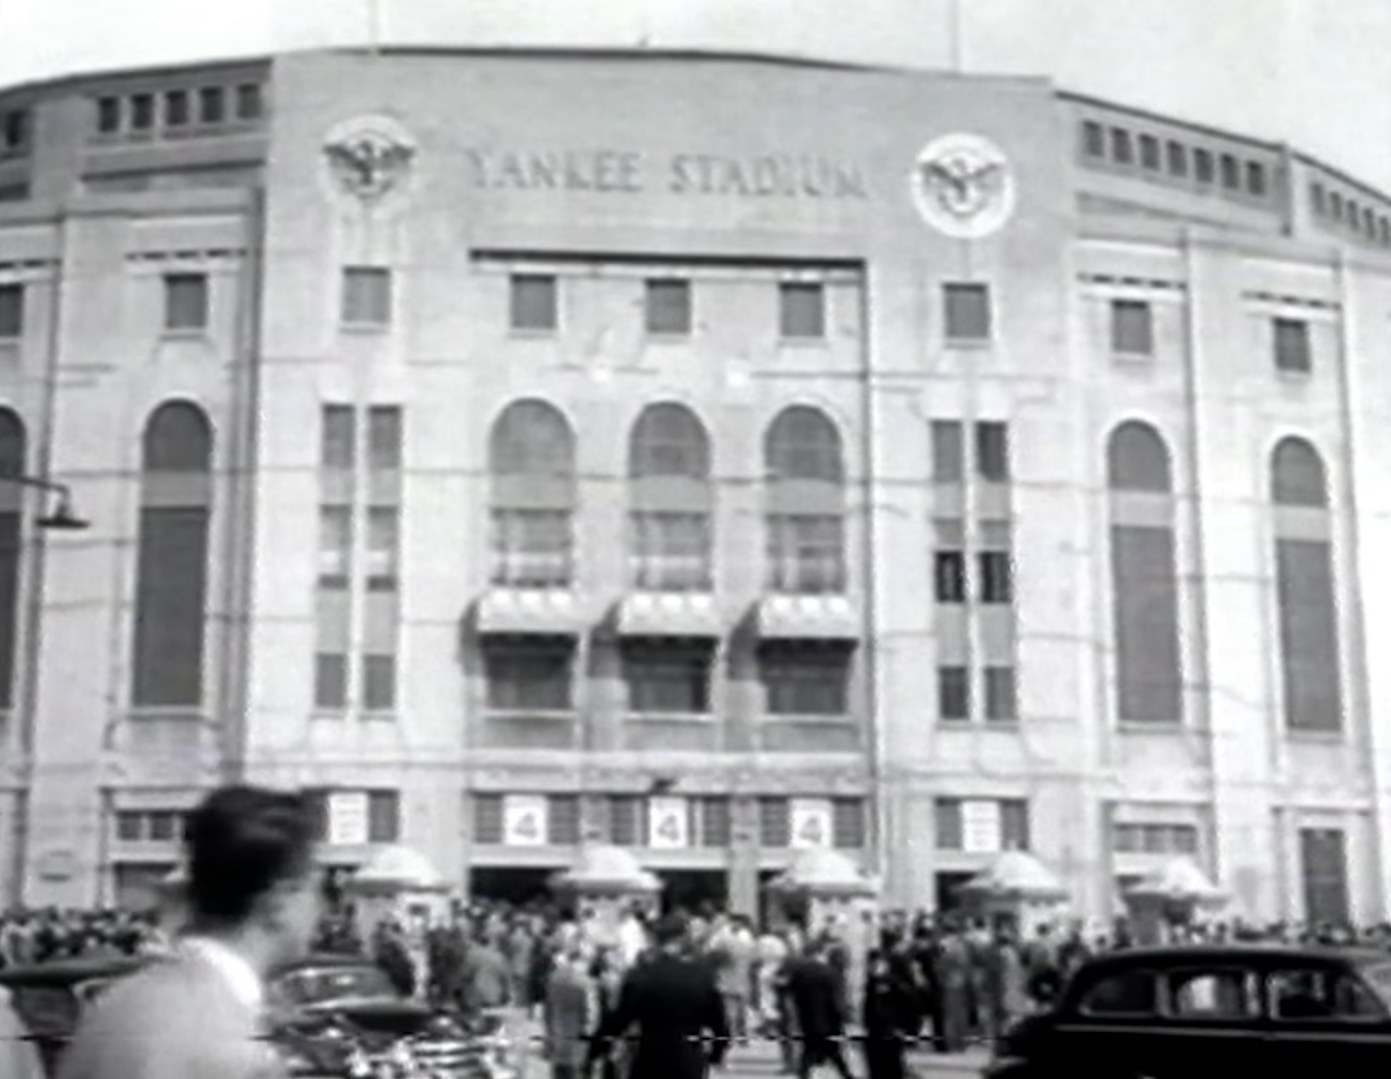 The Yankee Stadium opens in 1923